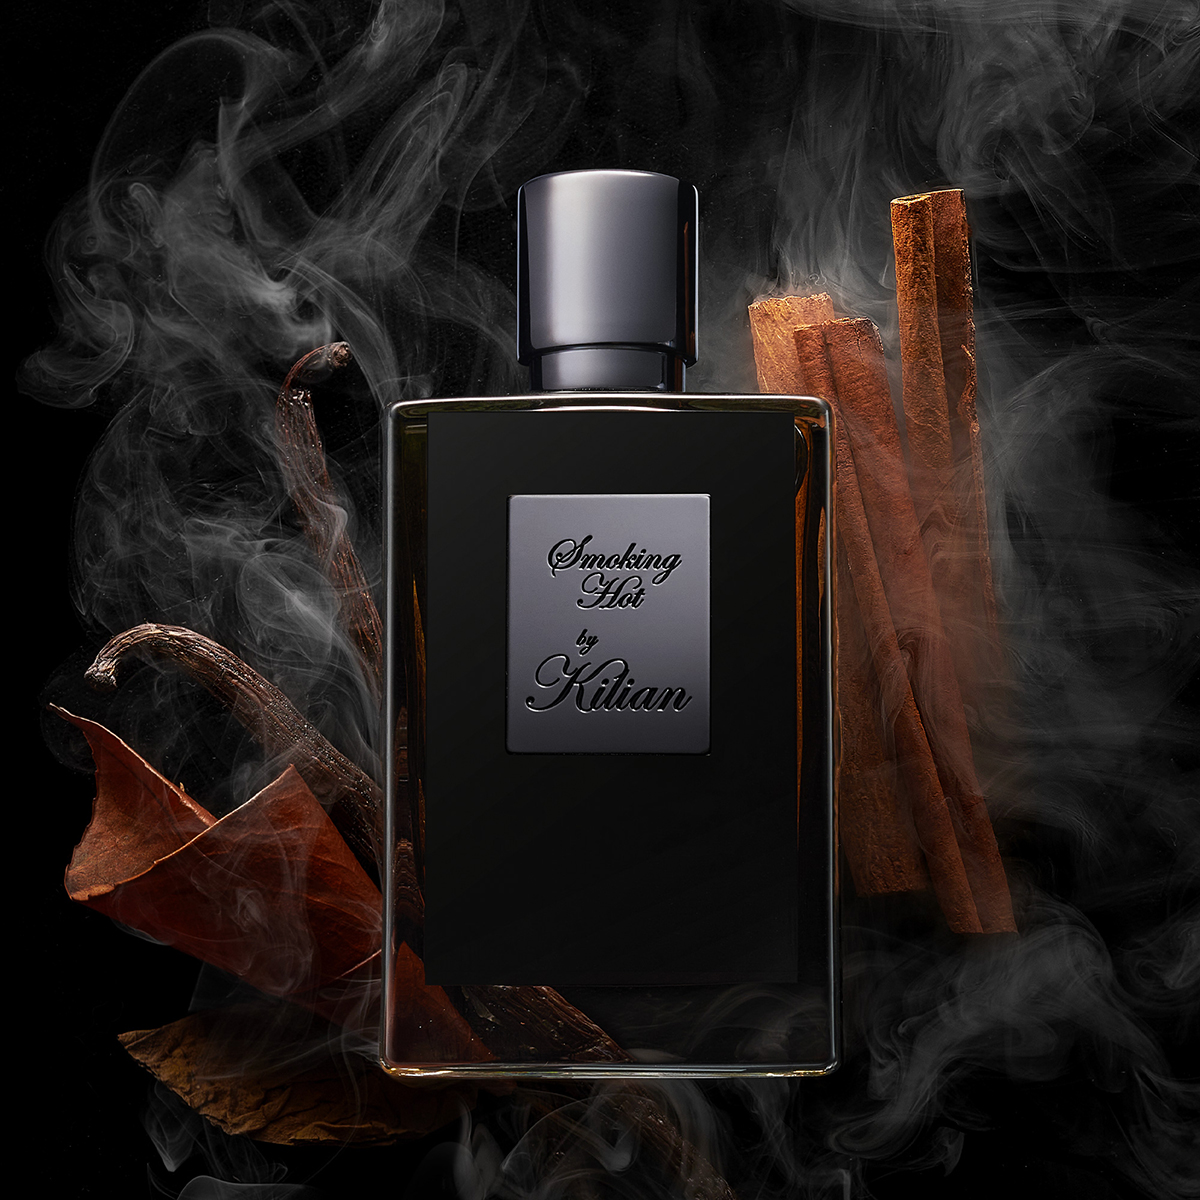 Kilian Paris - Smoking Hot Eau de Parfum